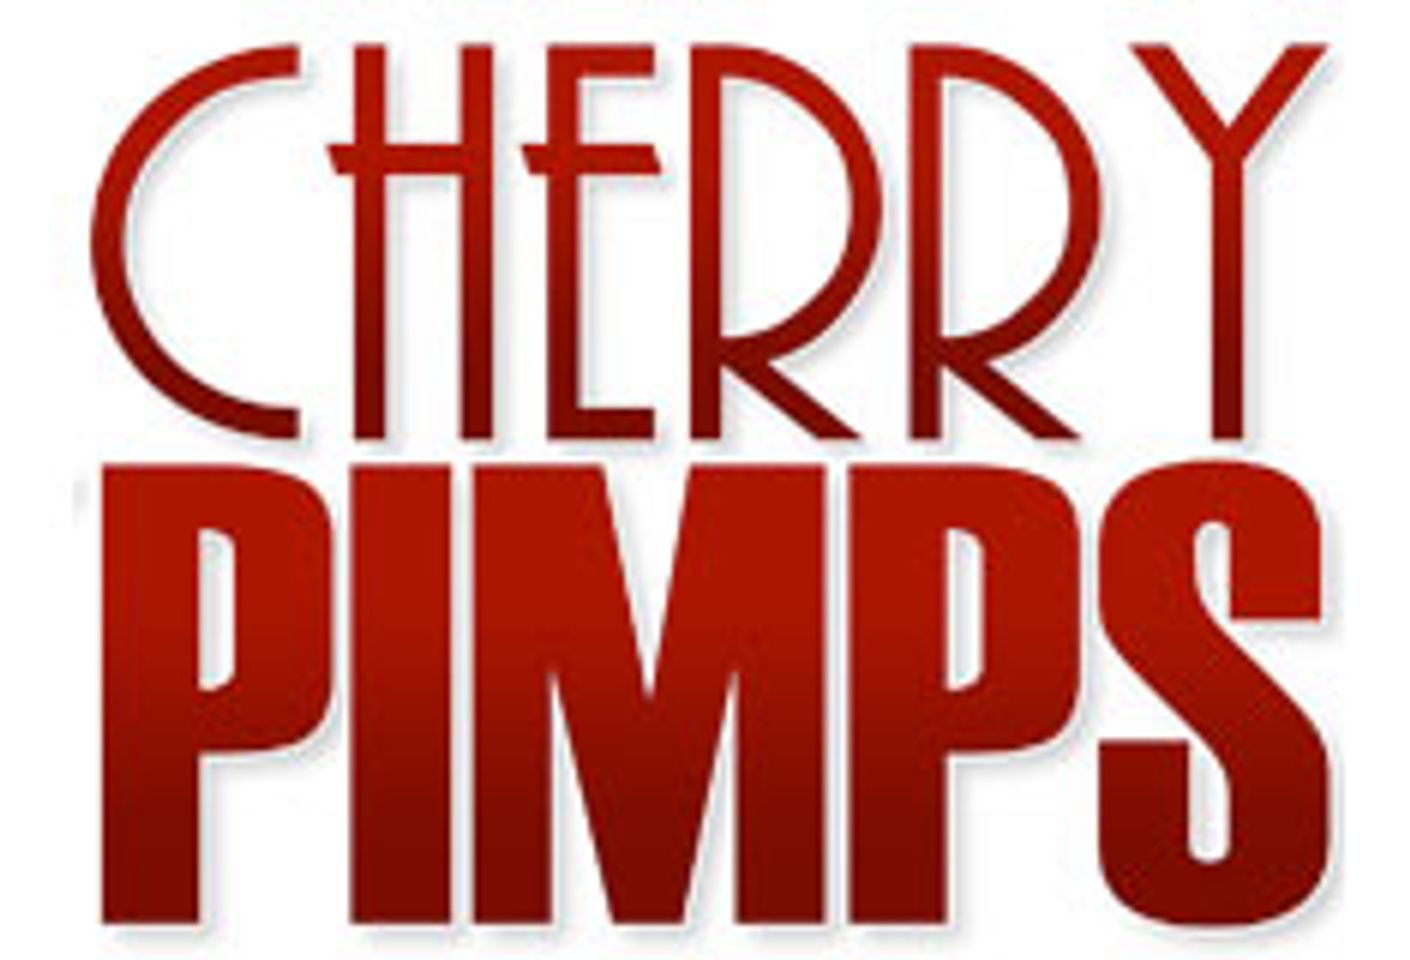 Cherry Pimps Celebrates Halloween with a Milestone